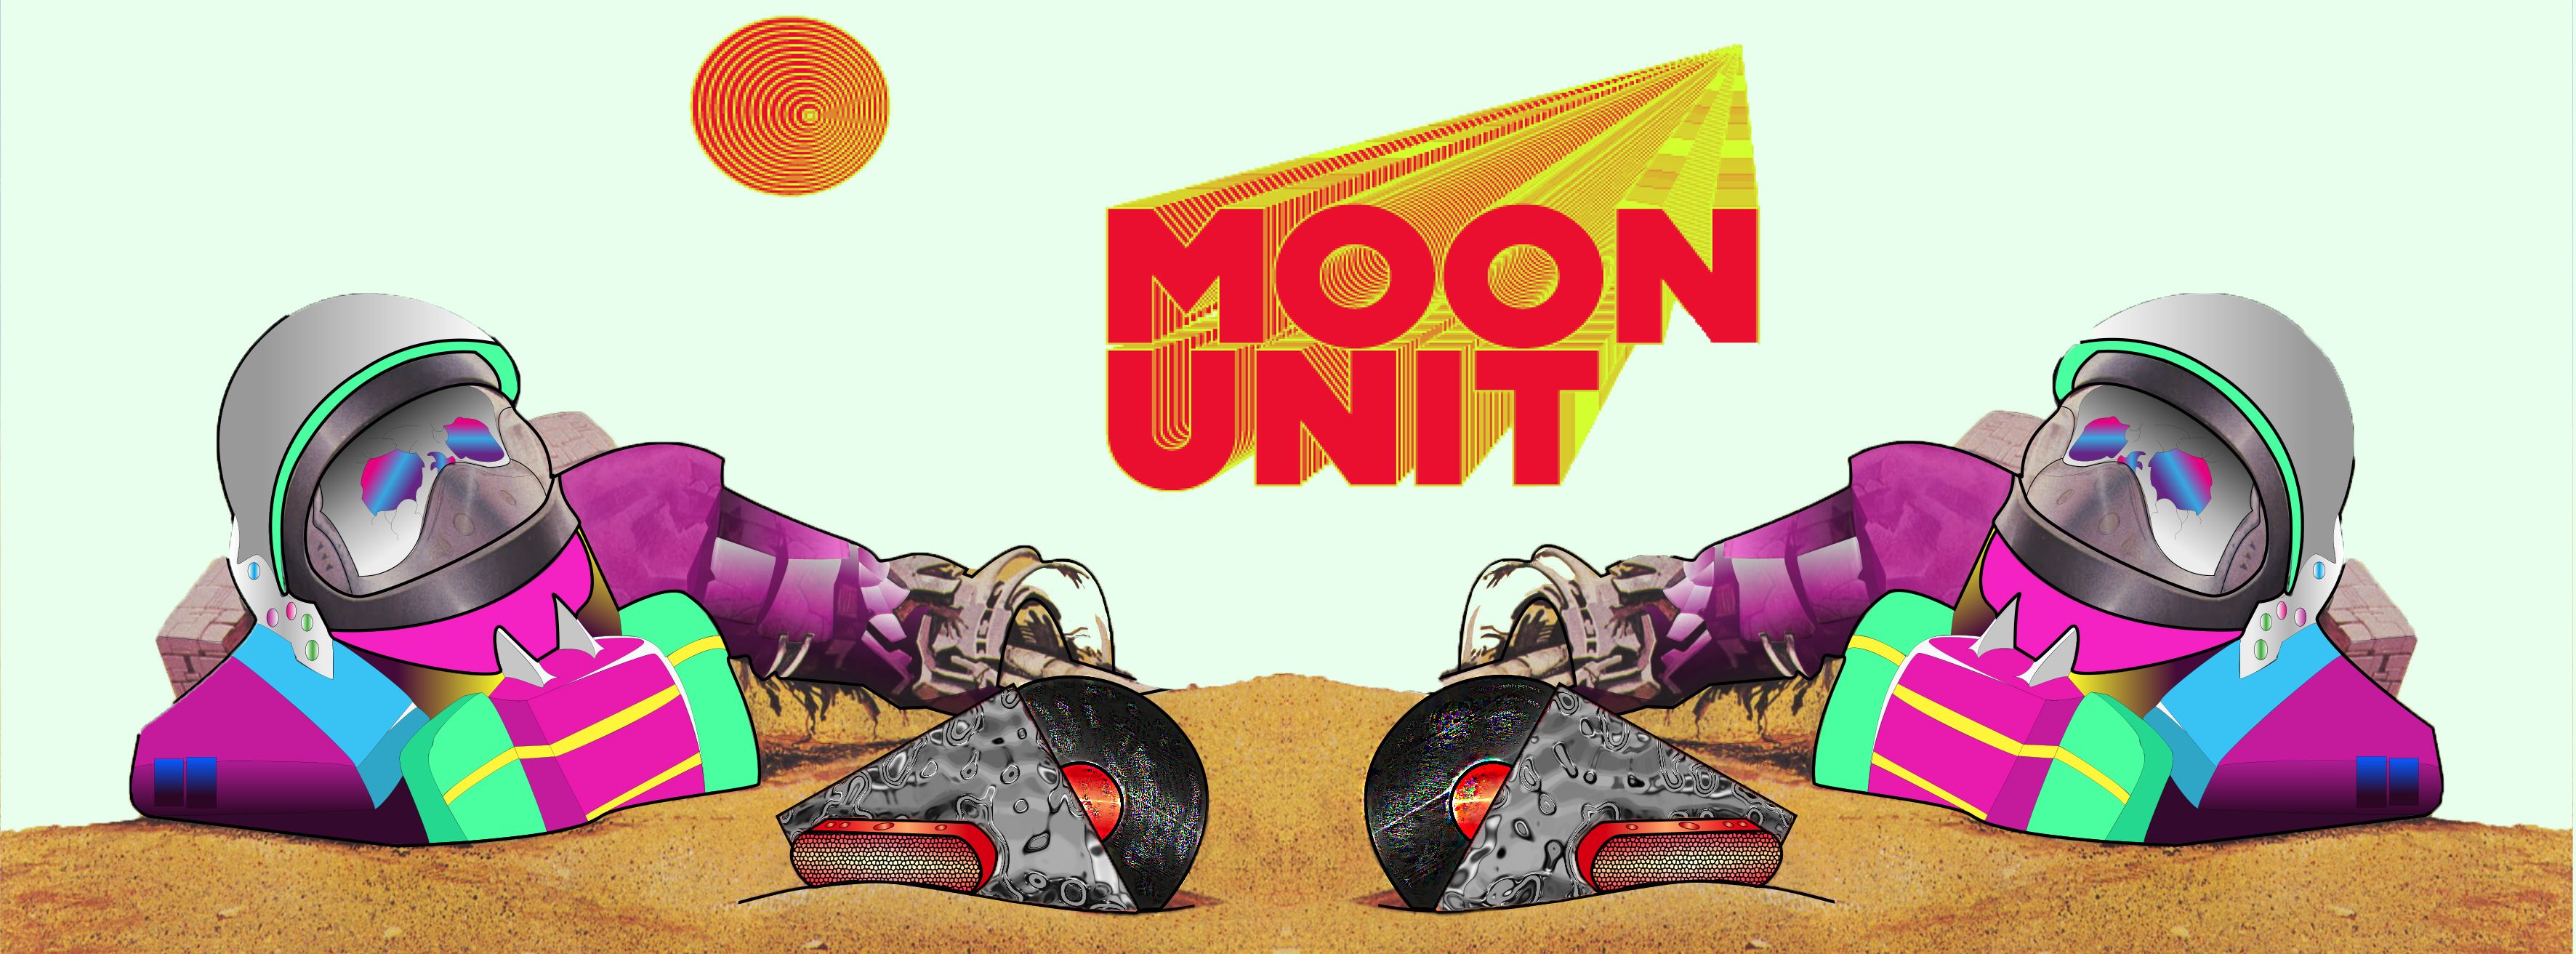 Moon Unit banner1.jpg